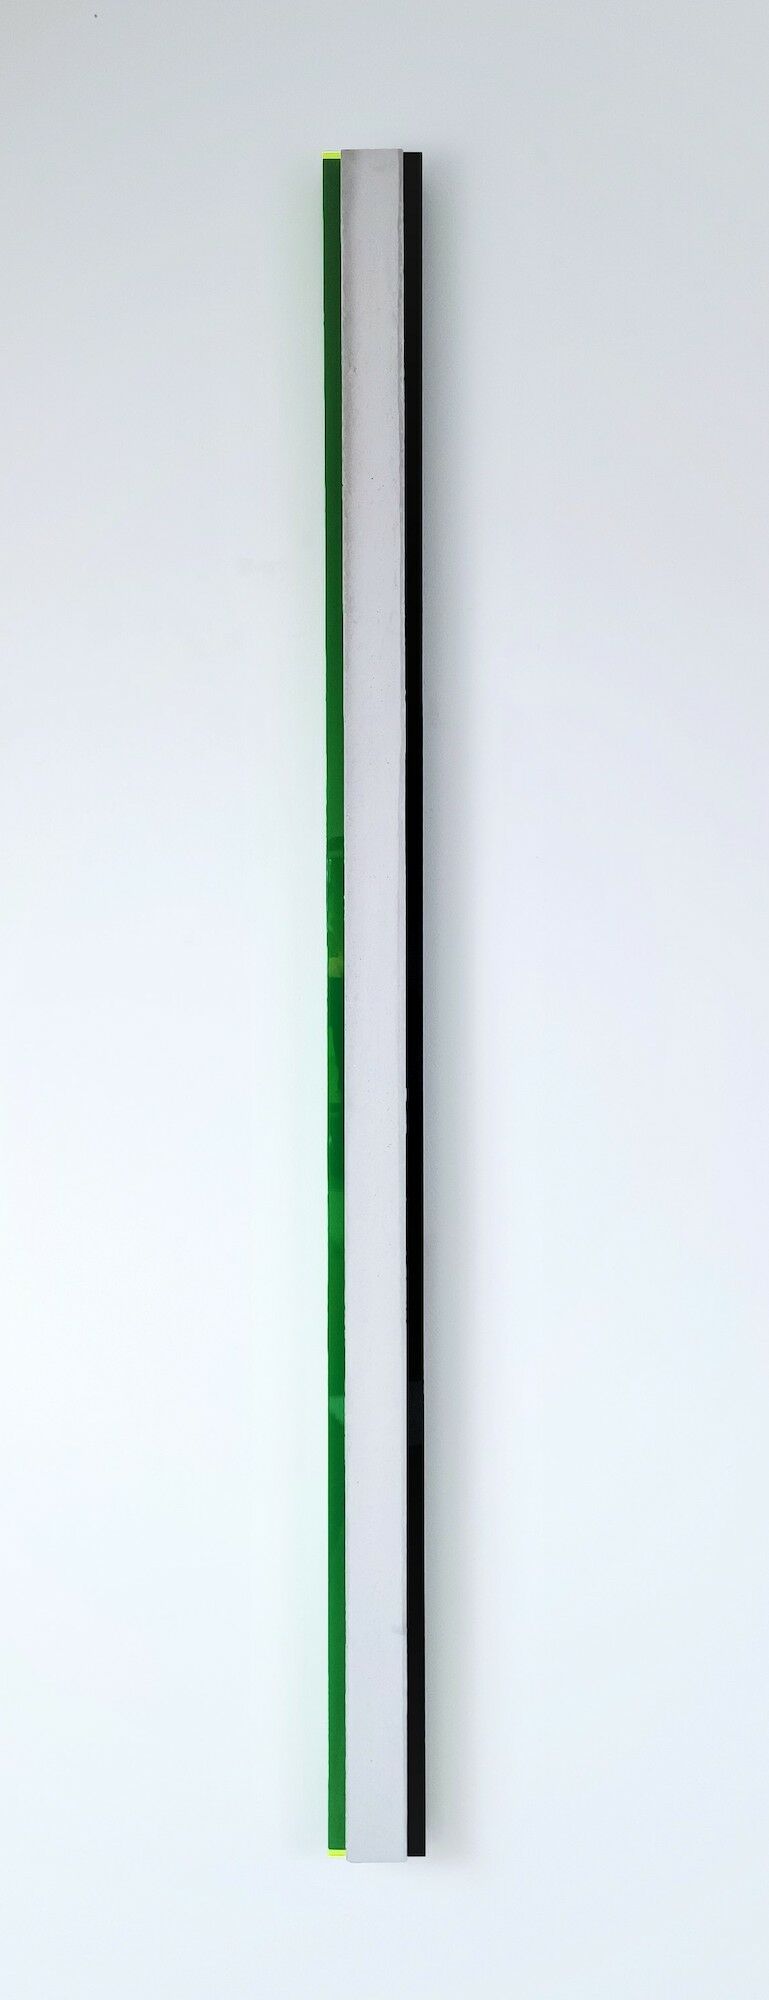 Object "Stele V" (2021) (Unique piece) by Selcuk Dizlek